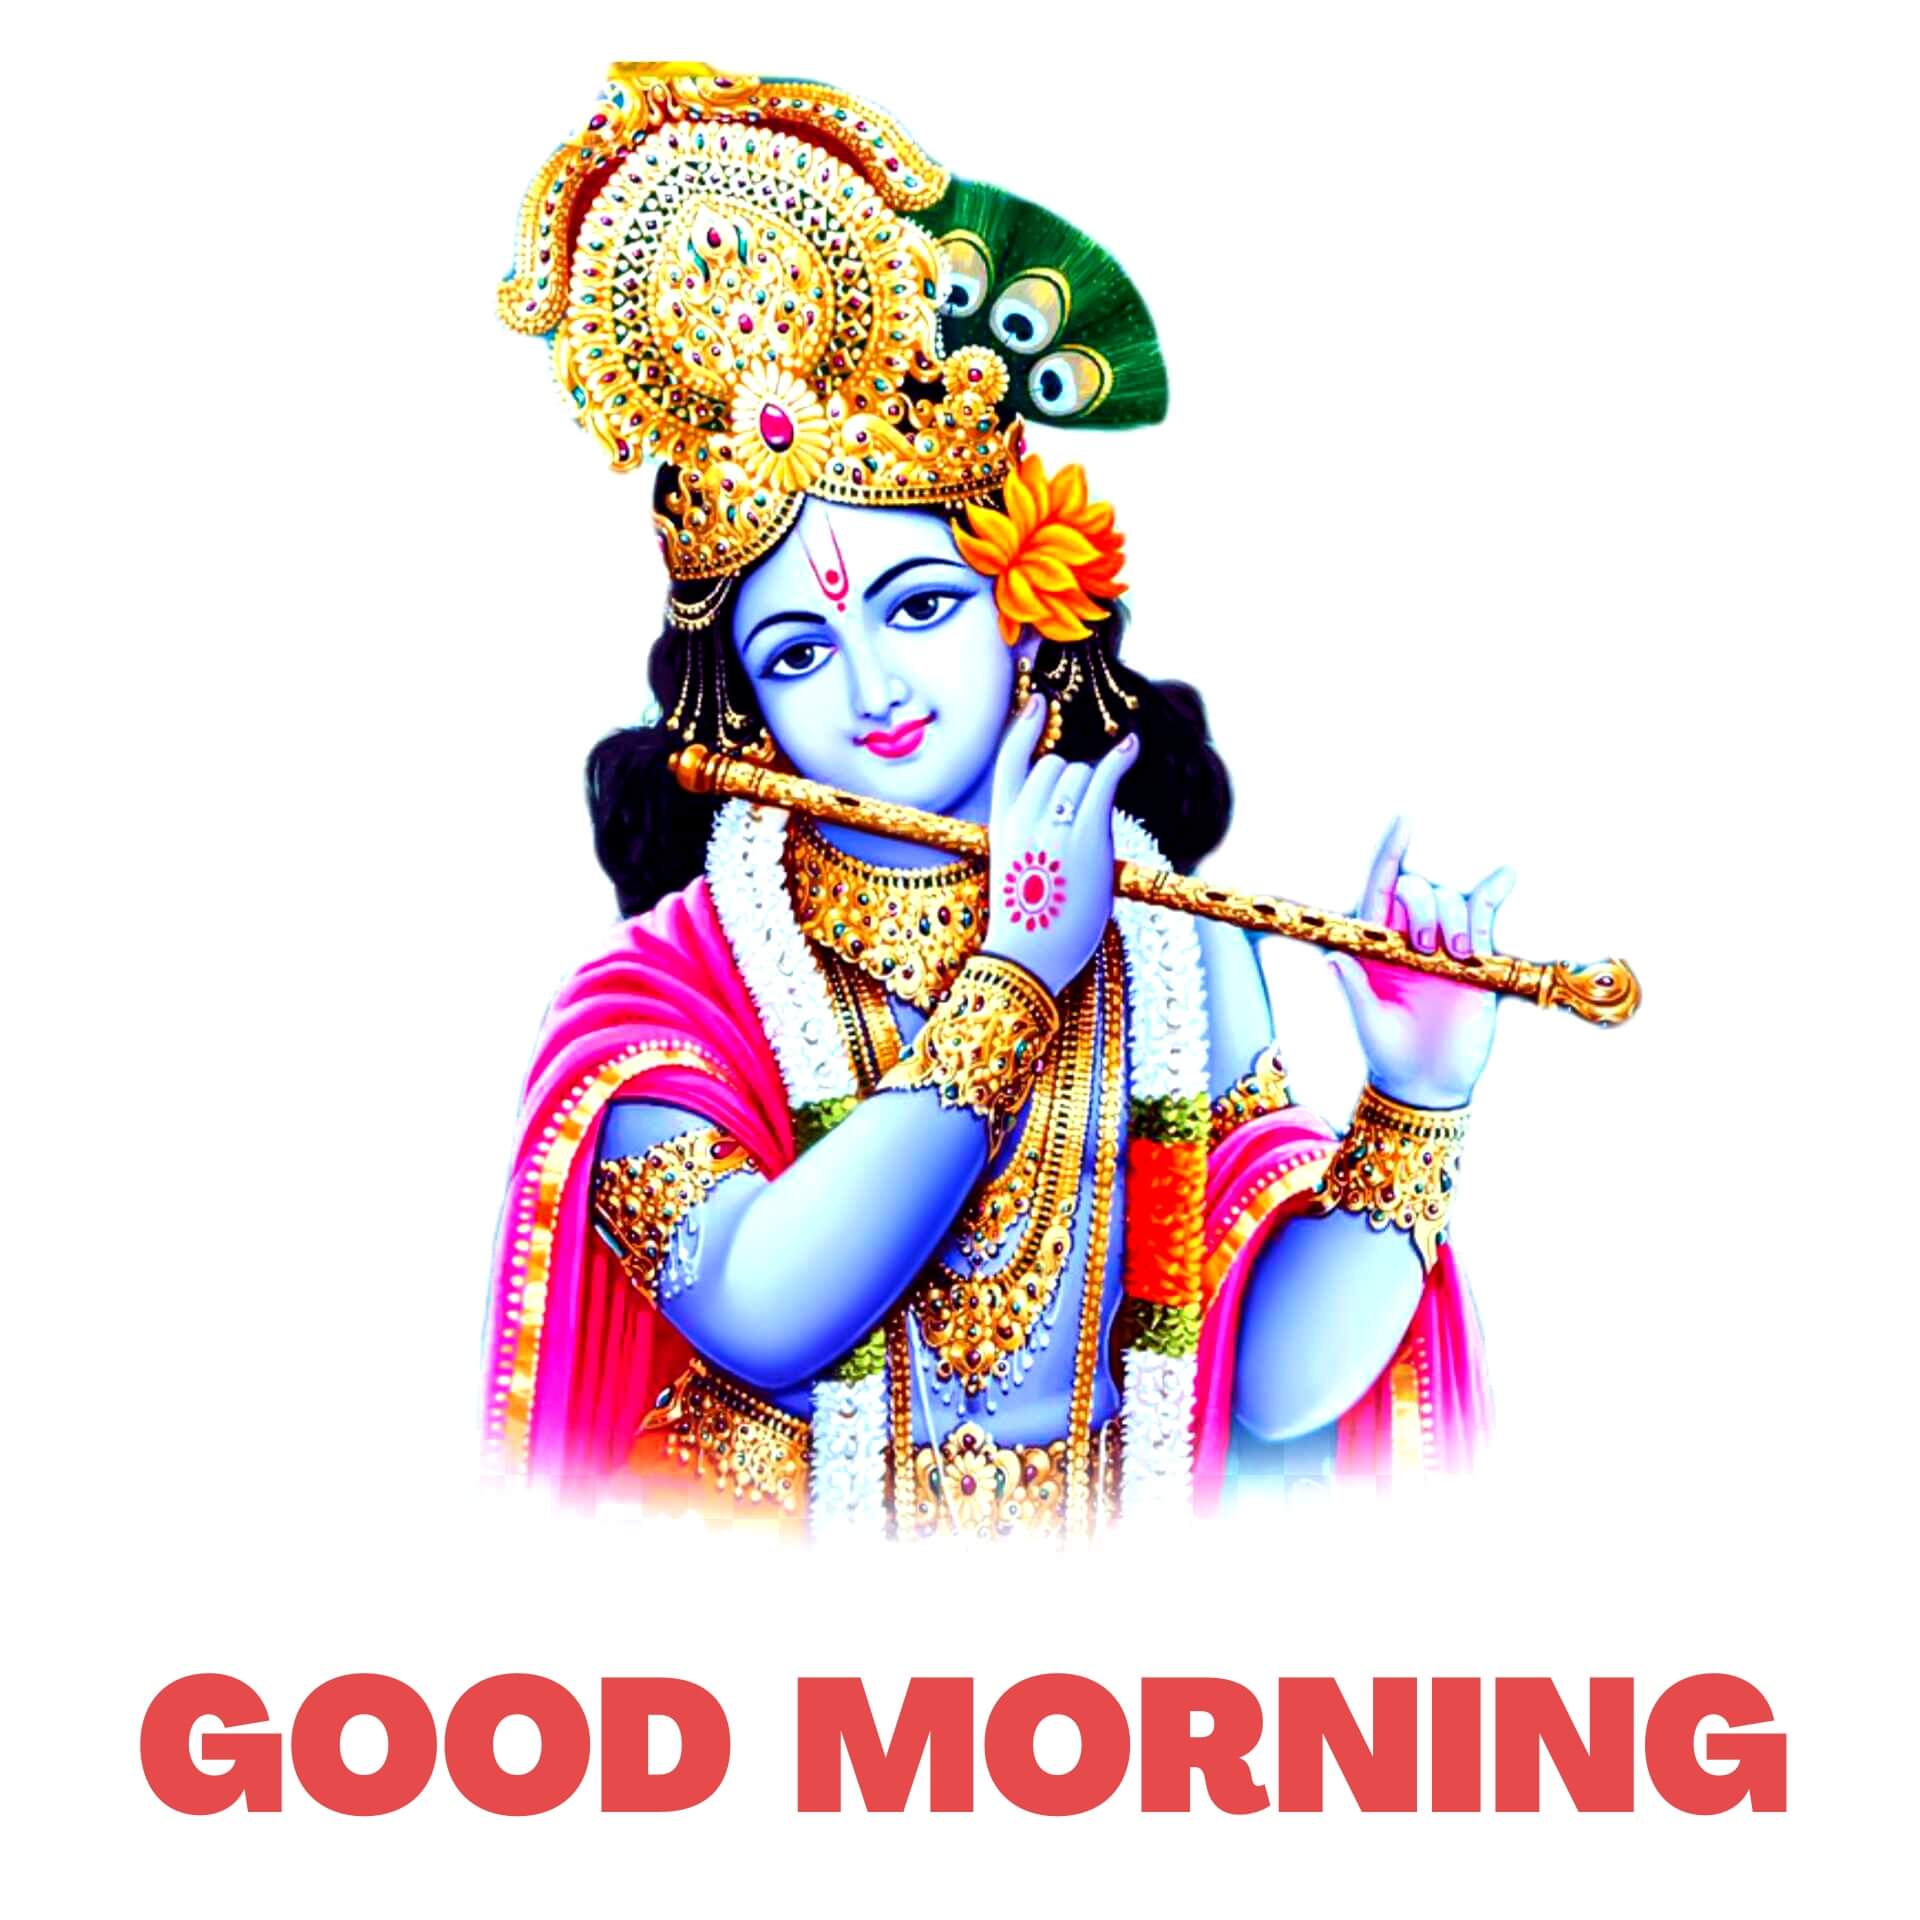 God Good Morning Images With krishna